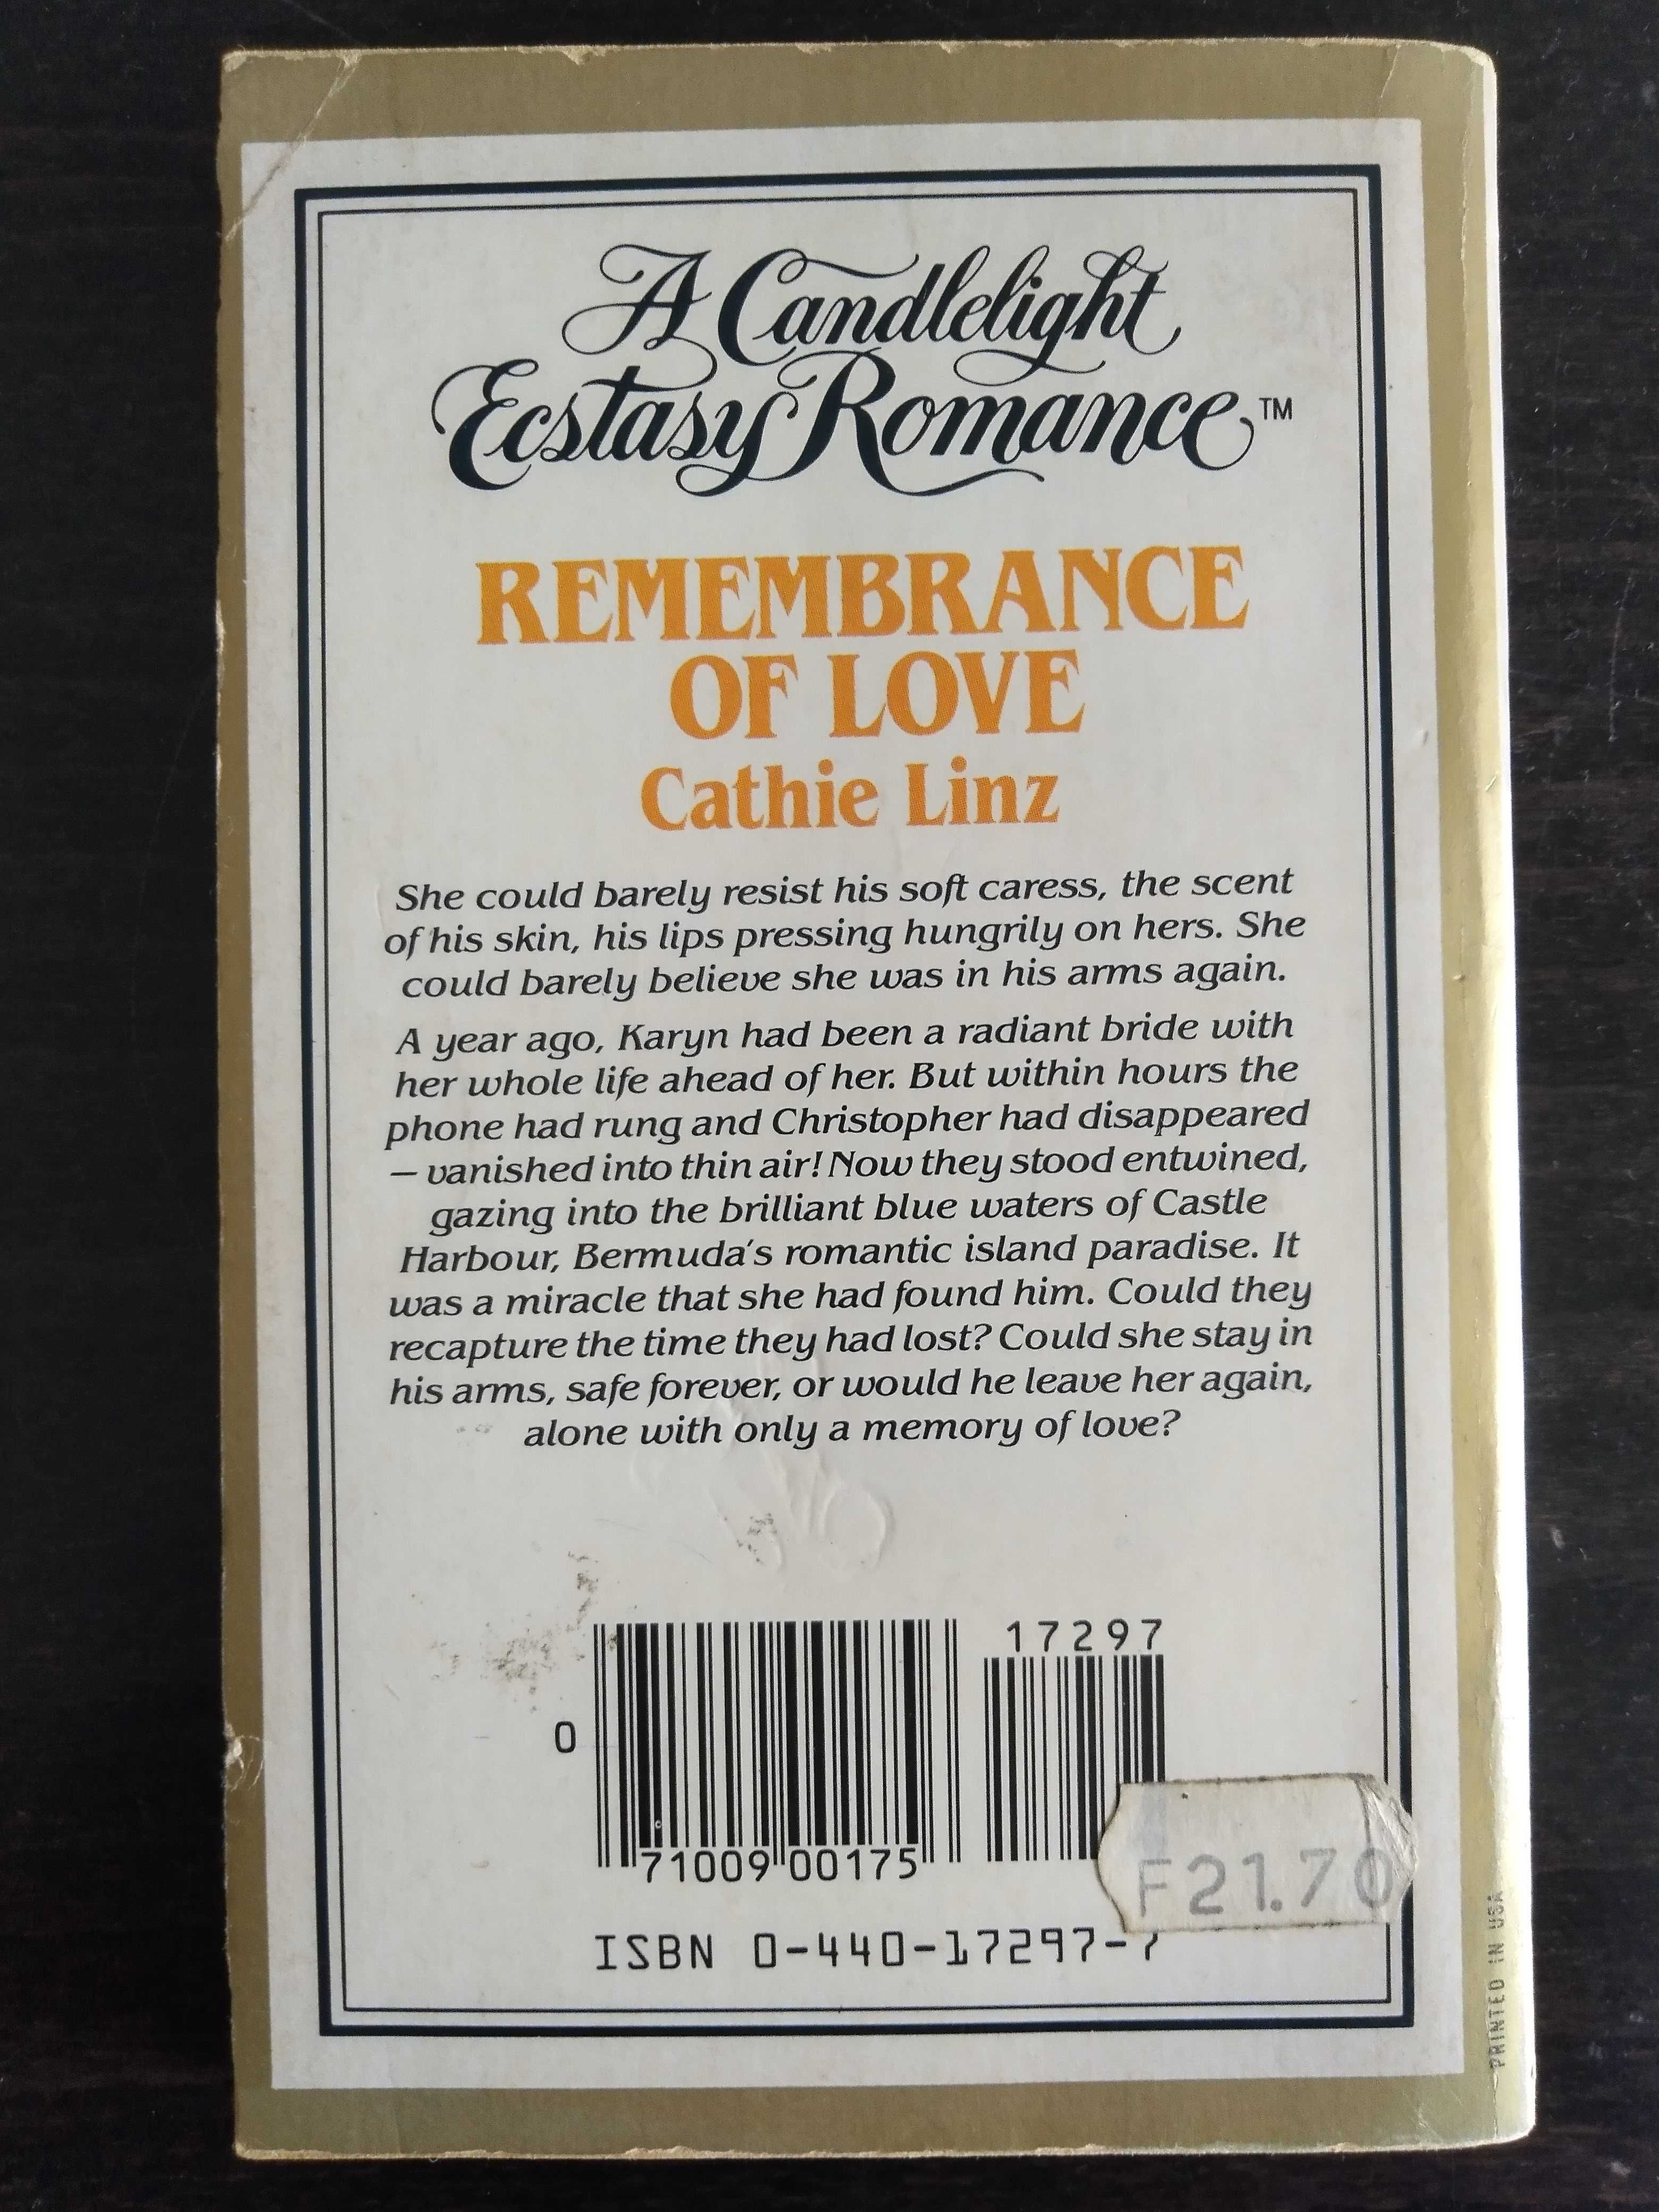 livro: Cathie Linz "Remembrance of love"